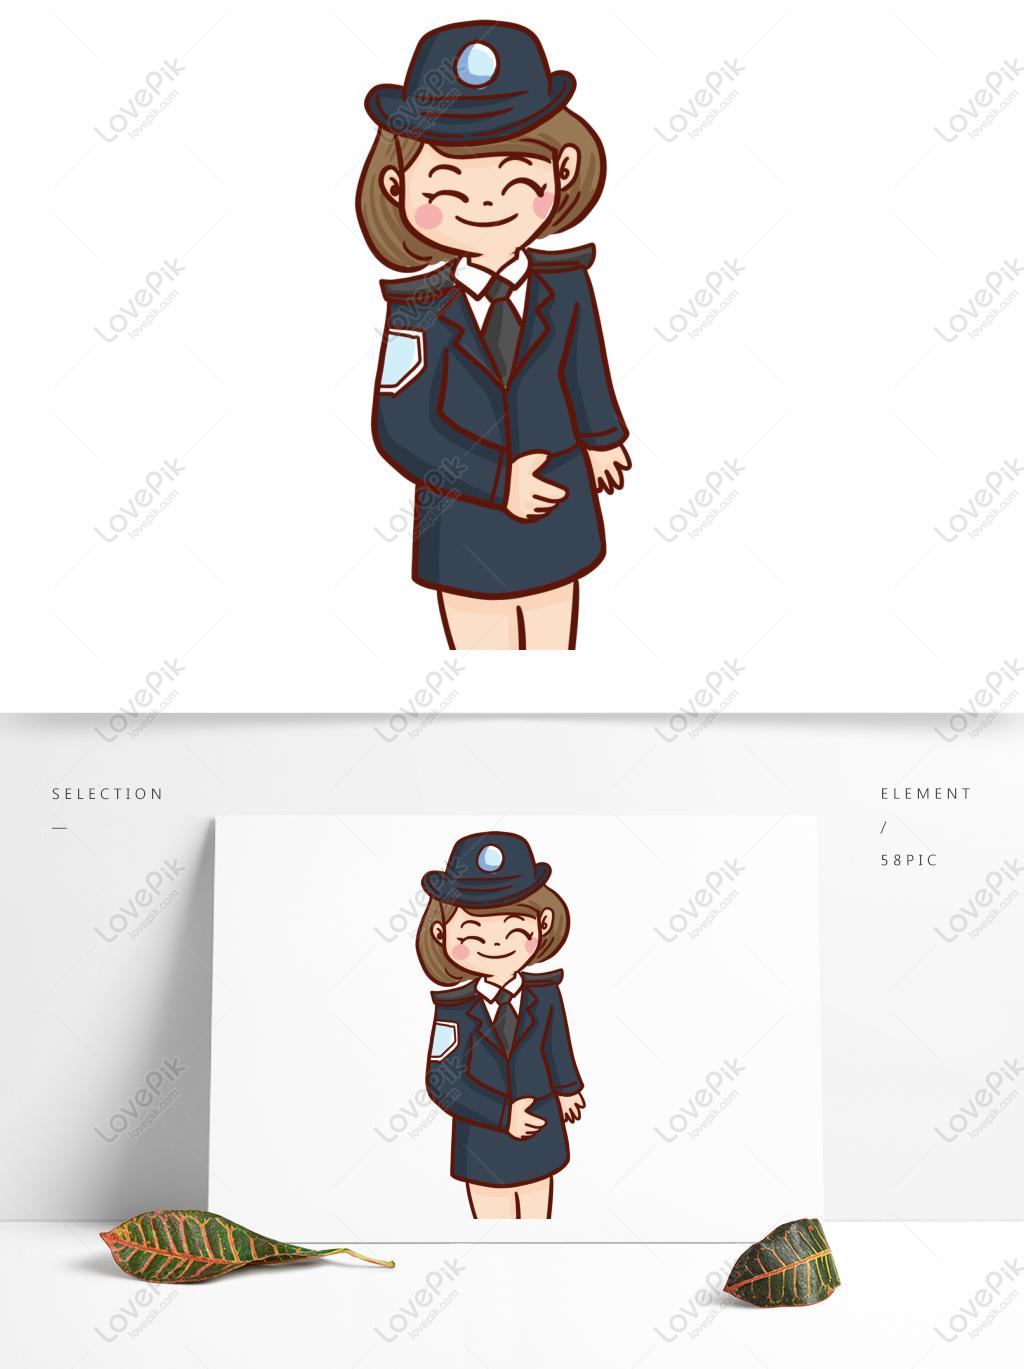 Desain Karakter Kartun Polisi Wanita Digambar Tangan Gambar Unduh Gratis Grafik 733589409 Format Gambar PSD Lovepikcom